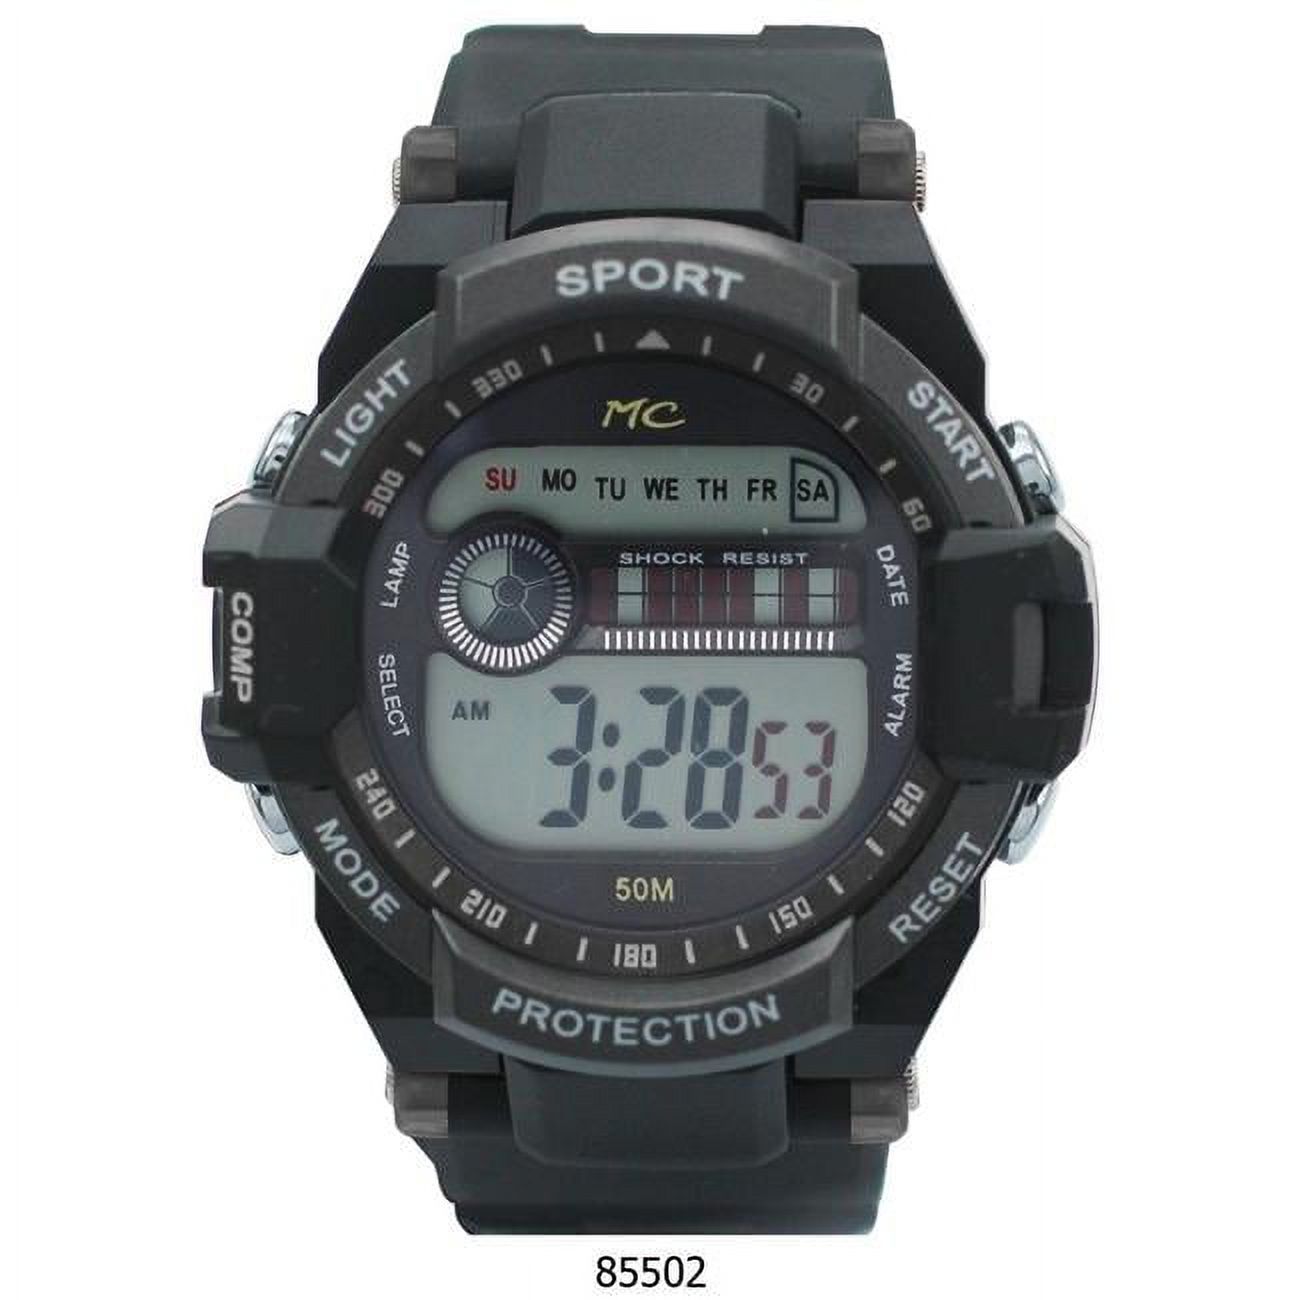 Montres Carlo 85502 Black 50 m LCD Digital Watch - image 1 of 1